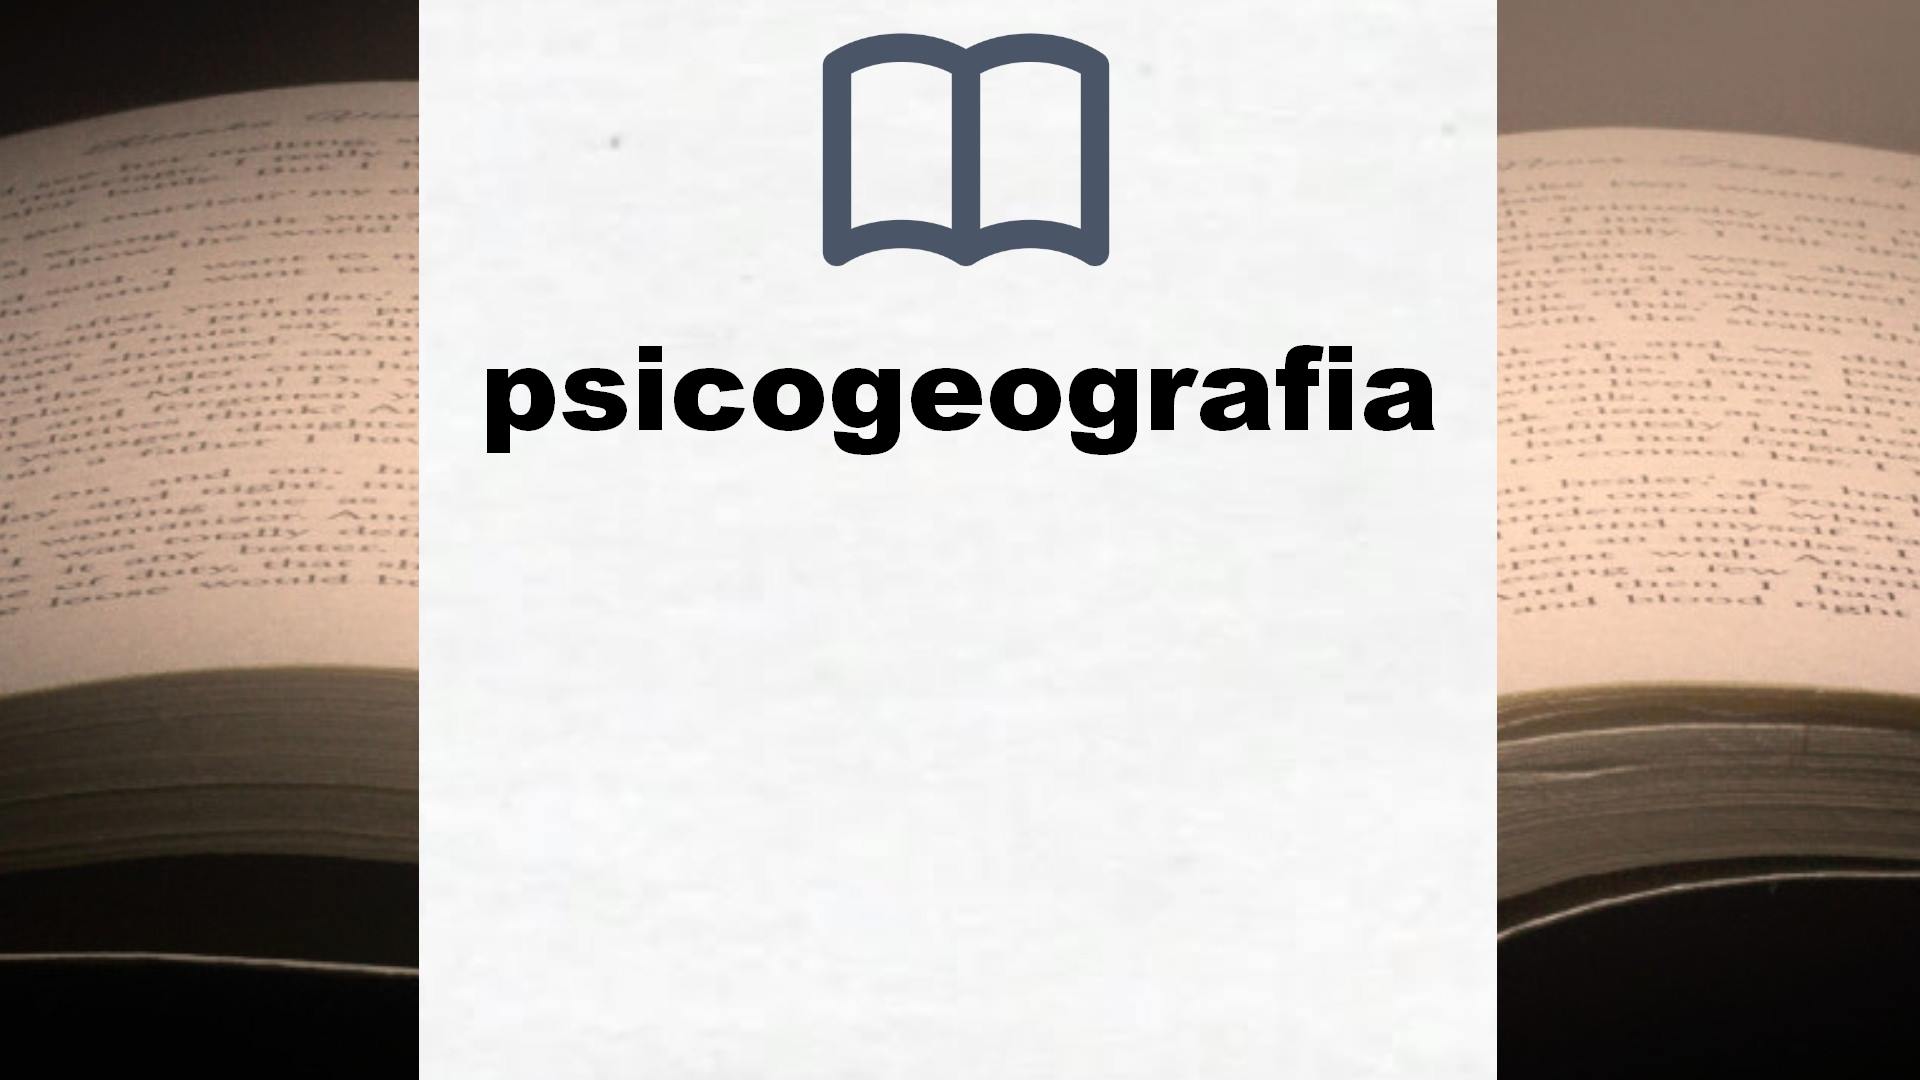 Libros sobre psicogeografia